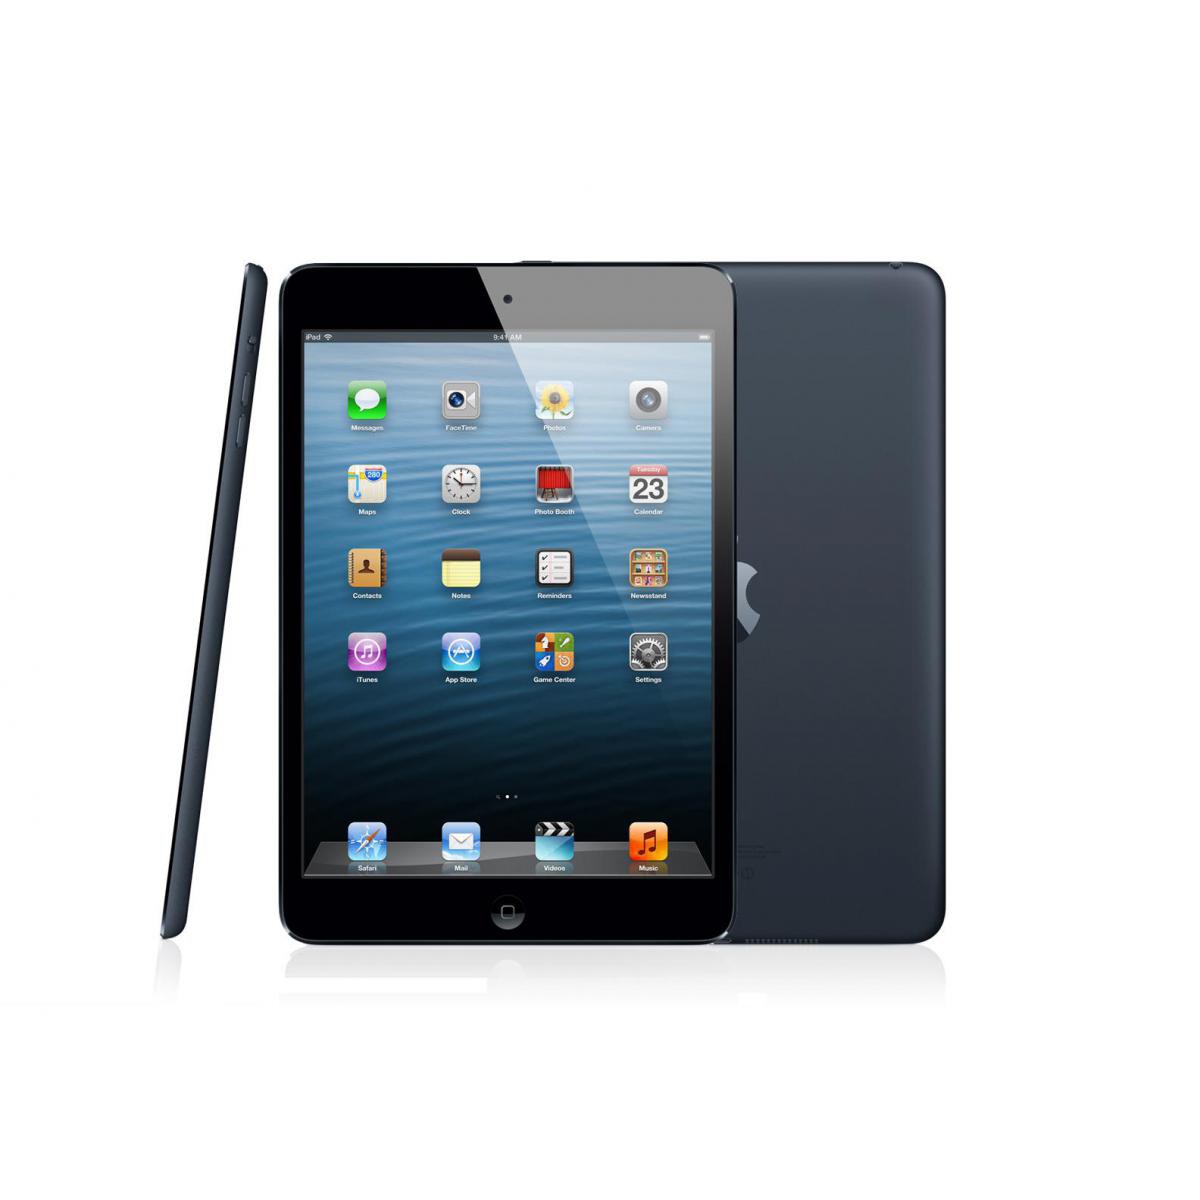 Apple iPad 4 16GB Wi-Fi - Black (Renewed)